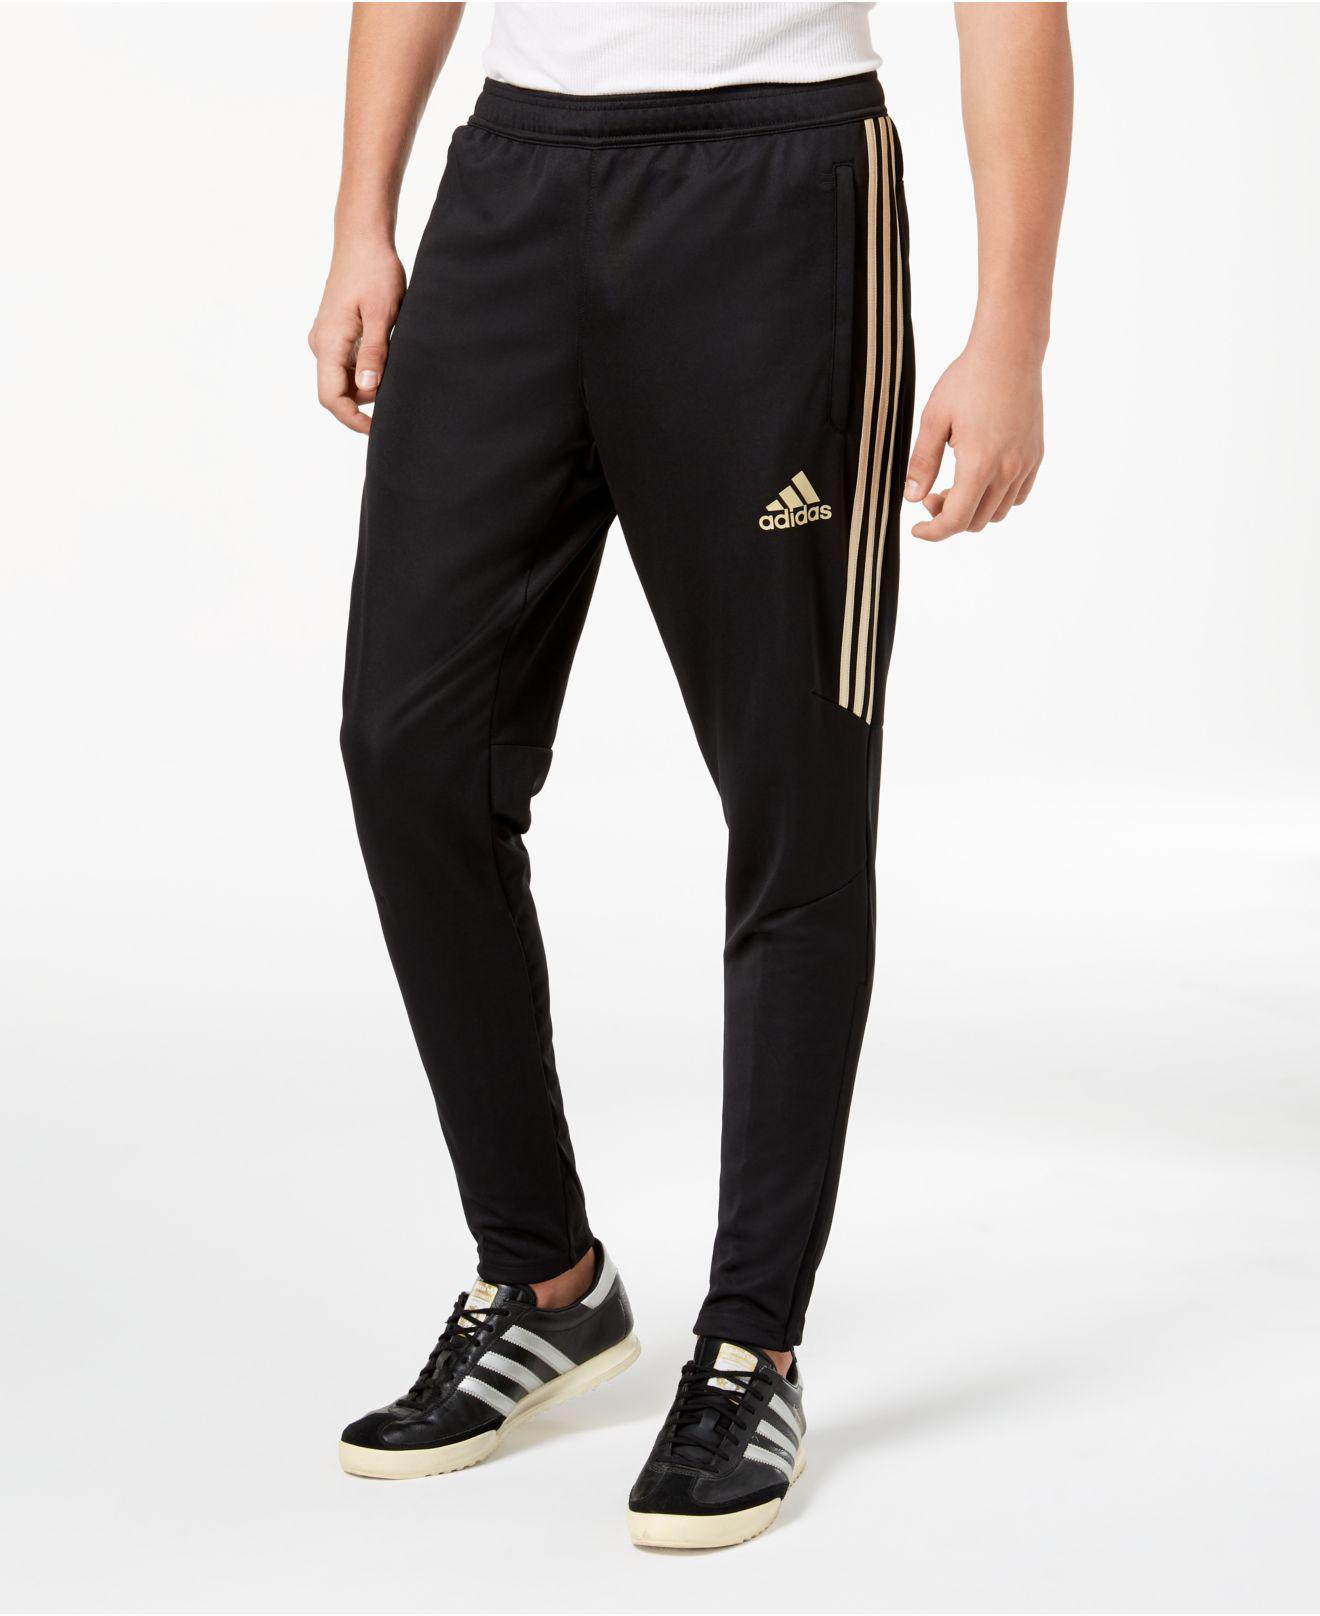 adidas Synthetic Tiro 17 Training Pants in Black/Gold (Black) for Men - Lyst